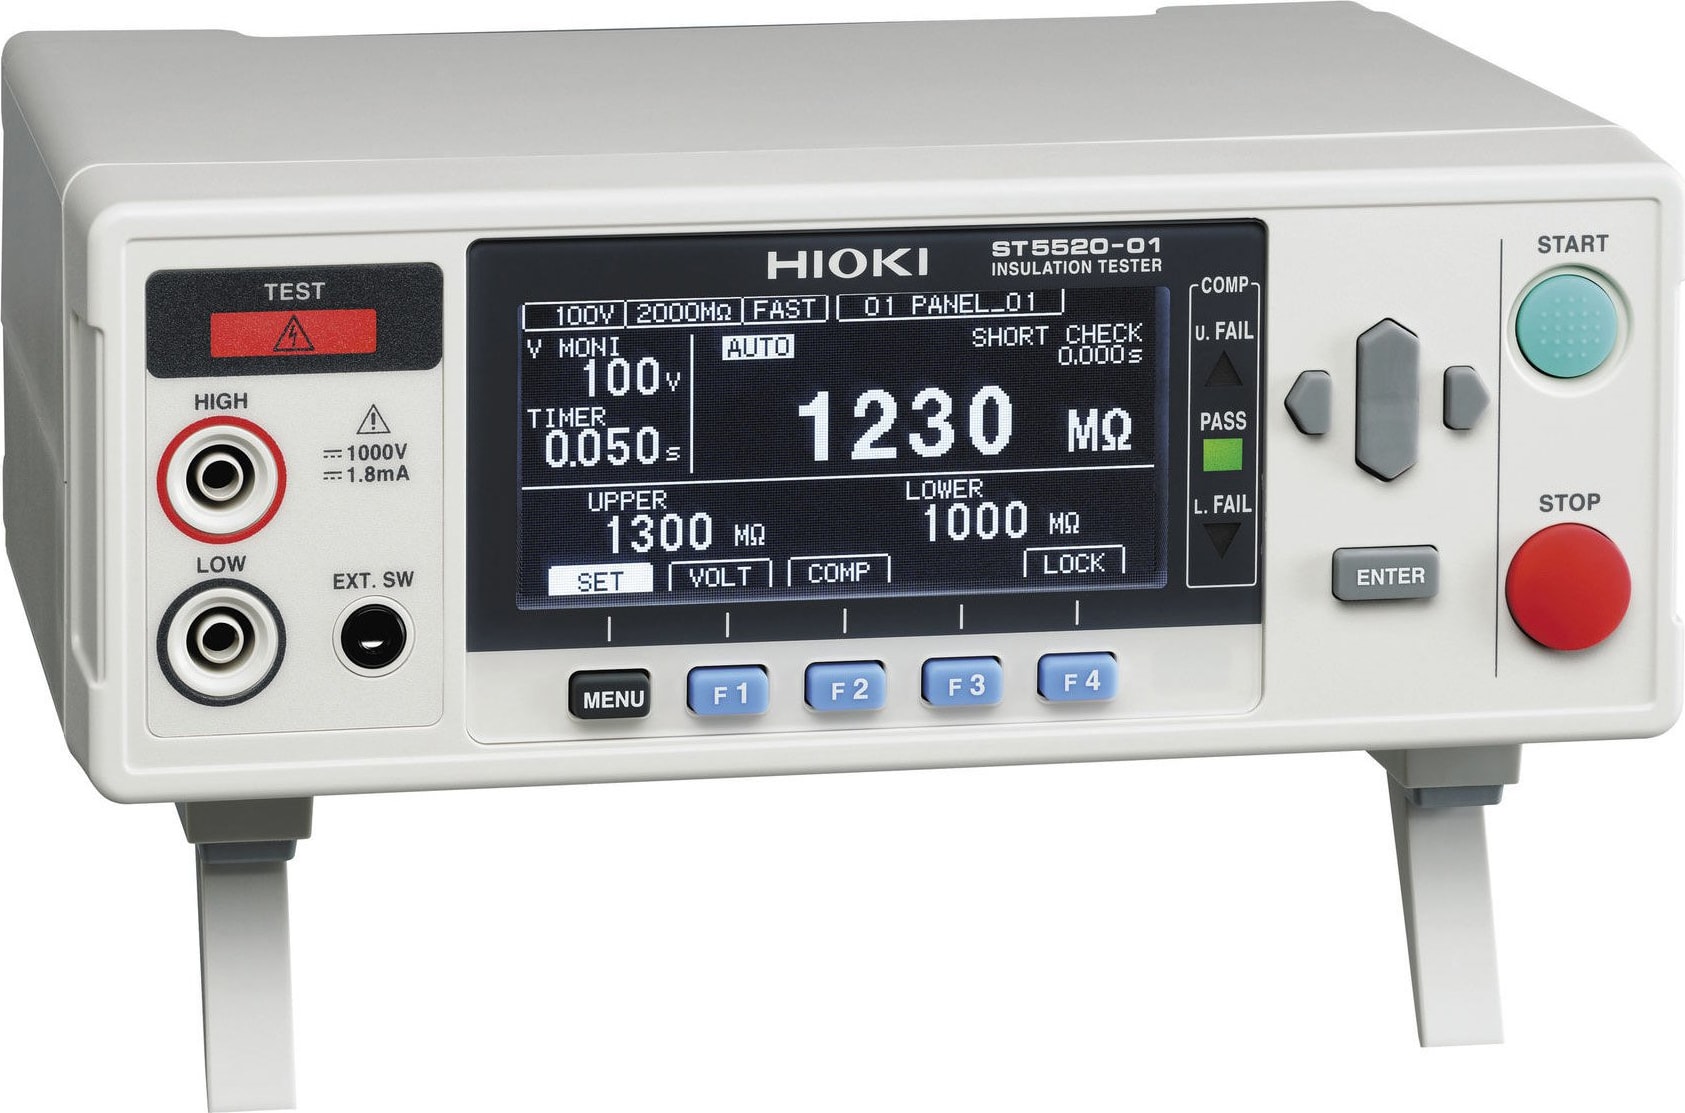 Hioki ST5520 Insulation Tester